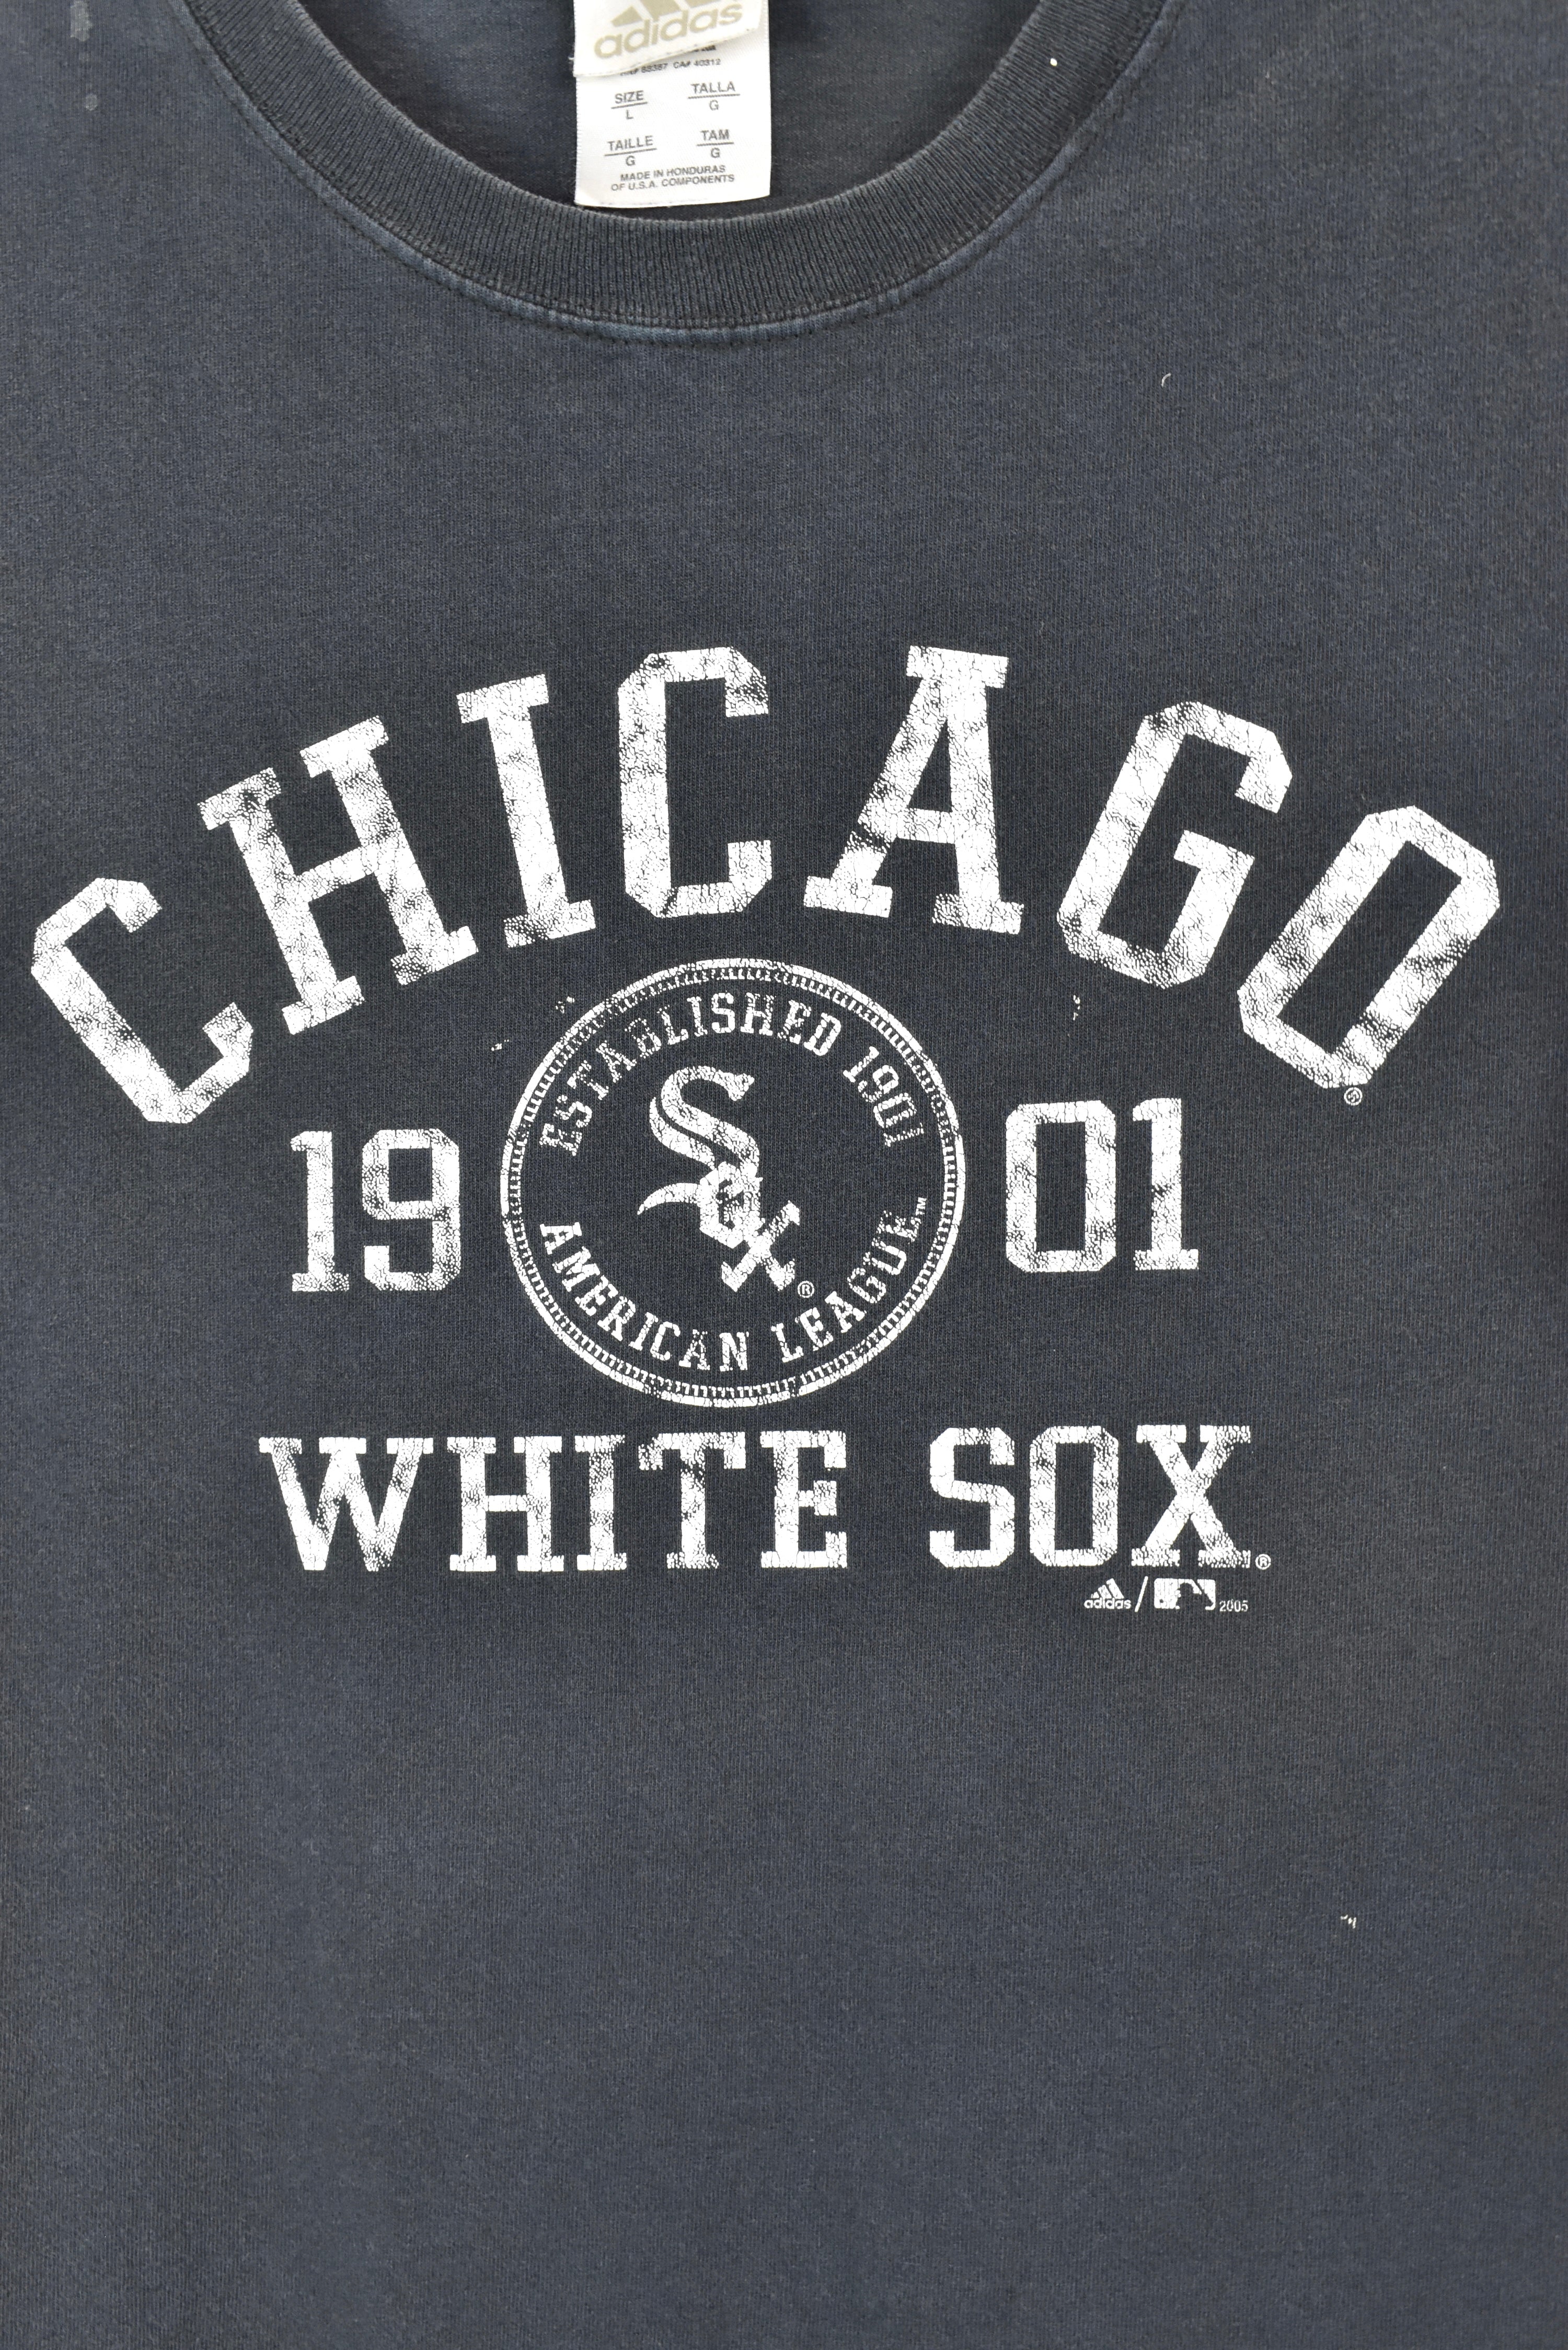 vintage chicago white sox apparel